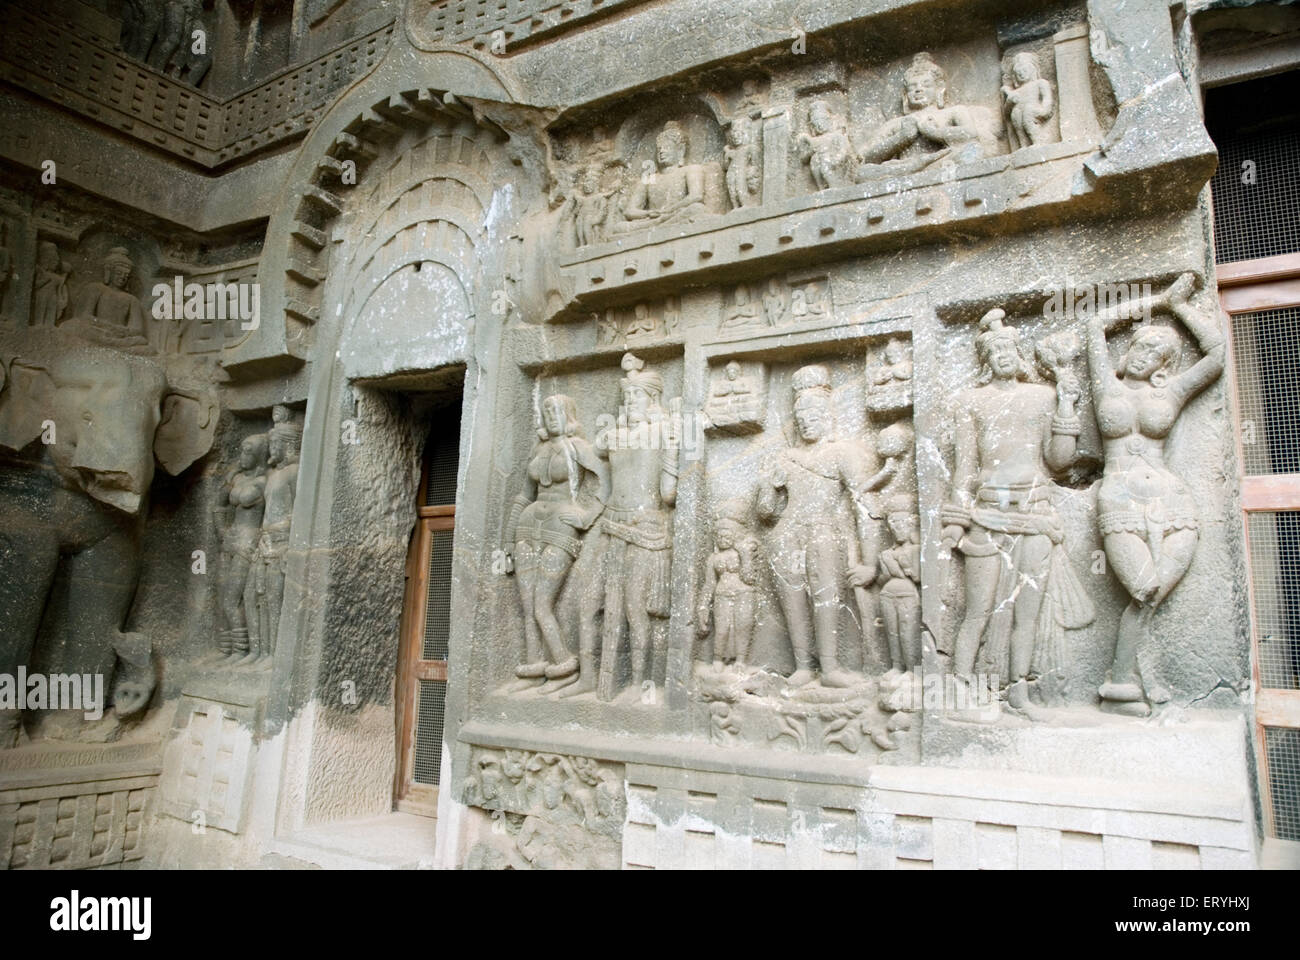 Stone carving coppie danzanti in grotta buddista ; Malavali ; Karla ; Pune Poona ; Maharashtra ; India Foto Stock